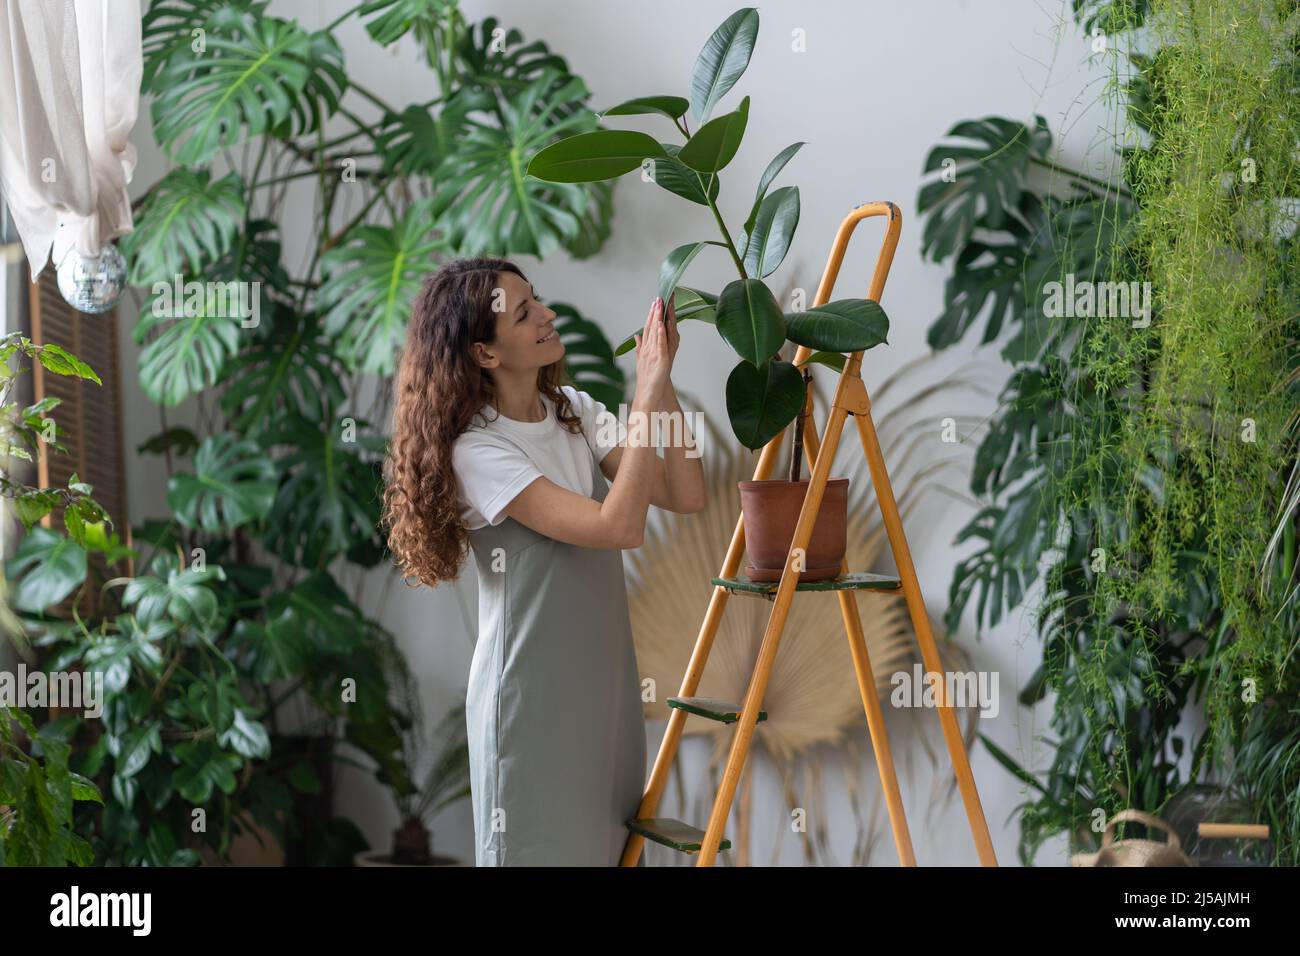 Freelance gardener girl take care of houseplants in home garden. Caring florist wiping ficus leaves Stock Photo